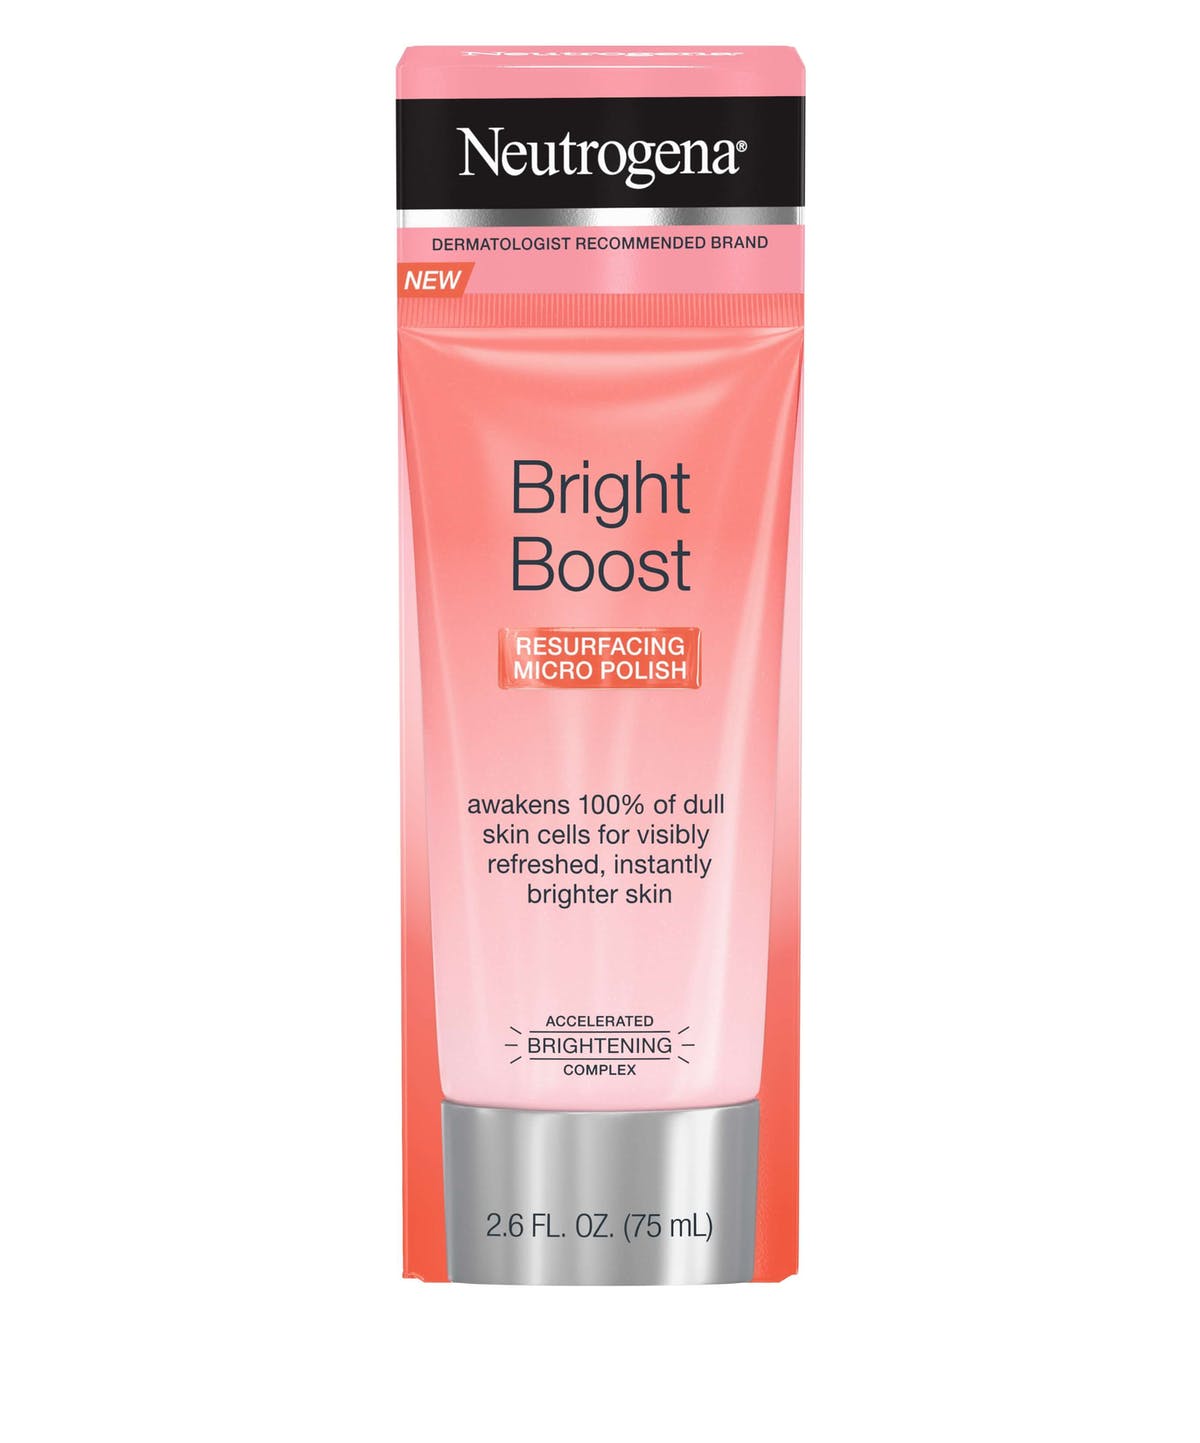 Neutrogena Bright Boost Resurfacing Micro Polish